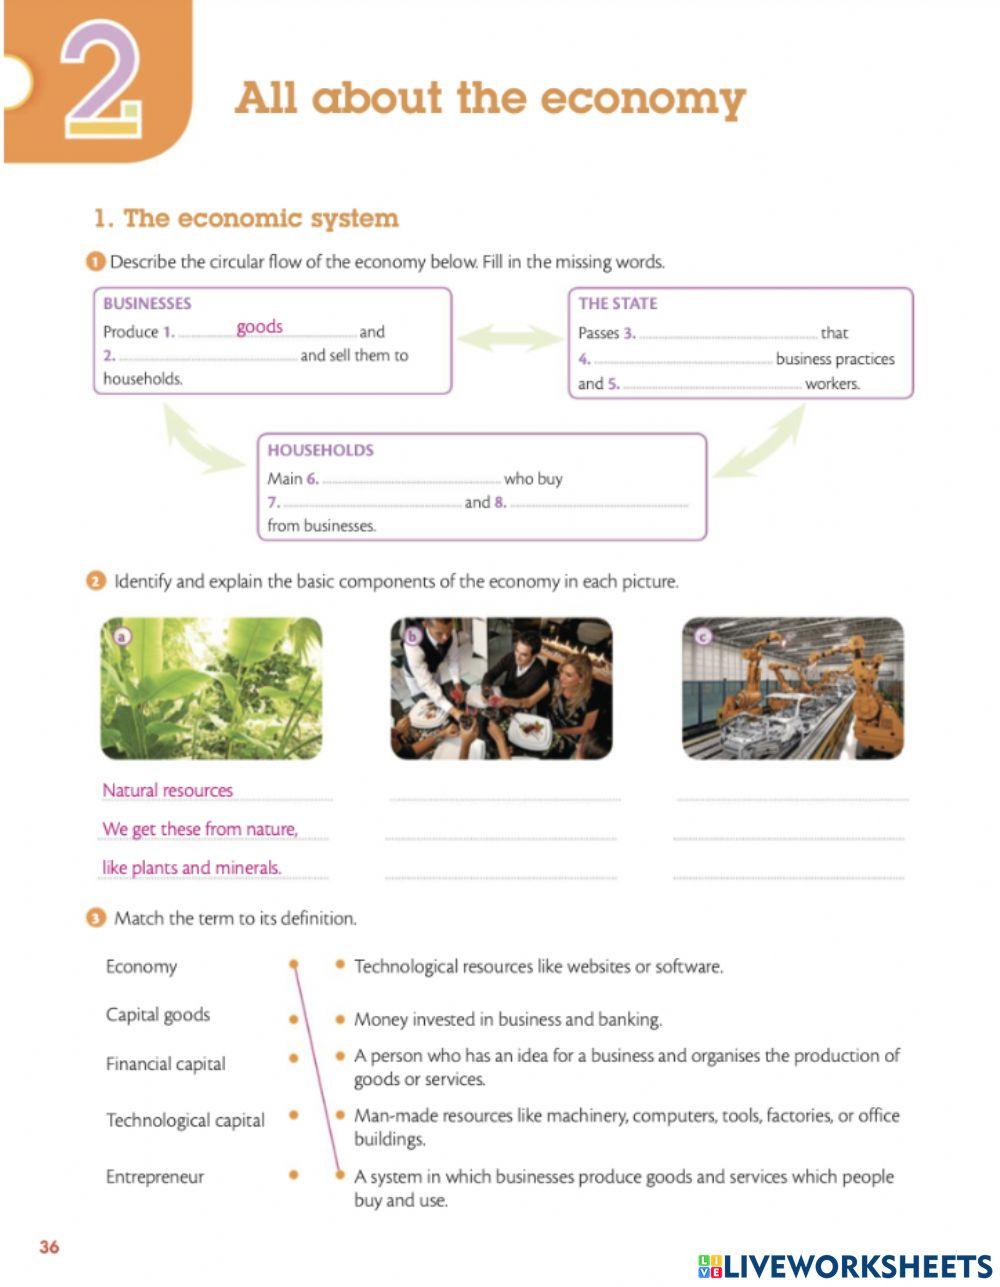 The economic system